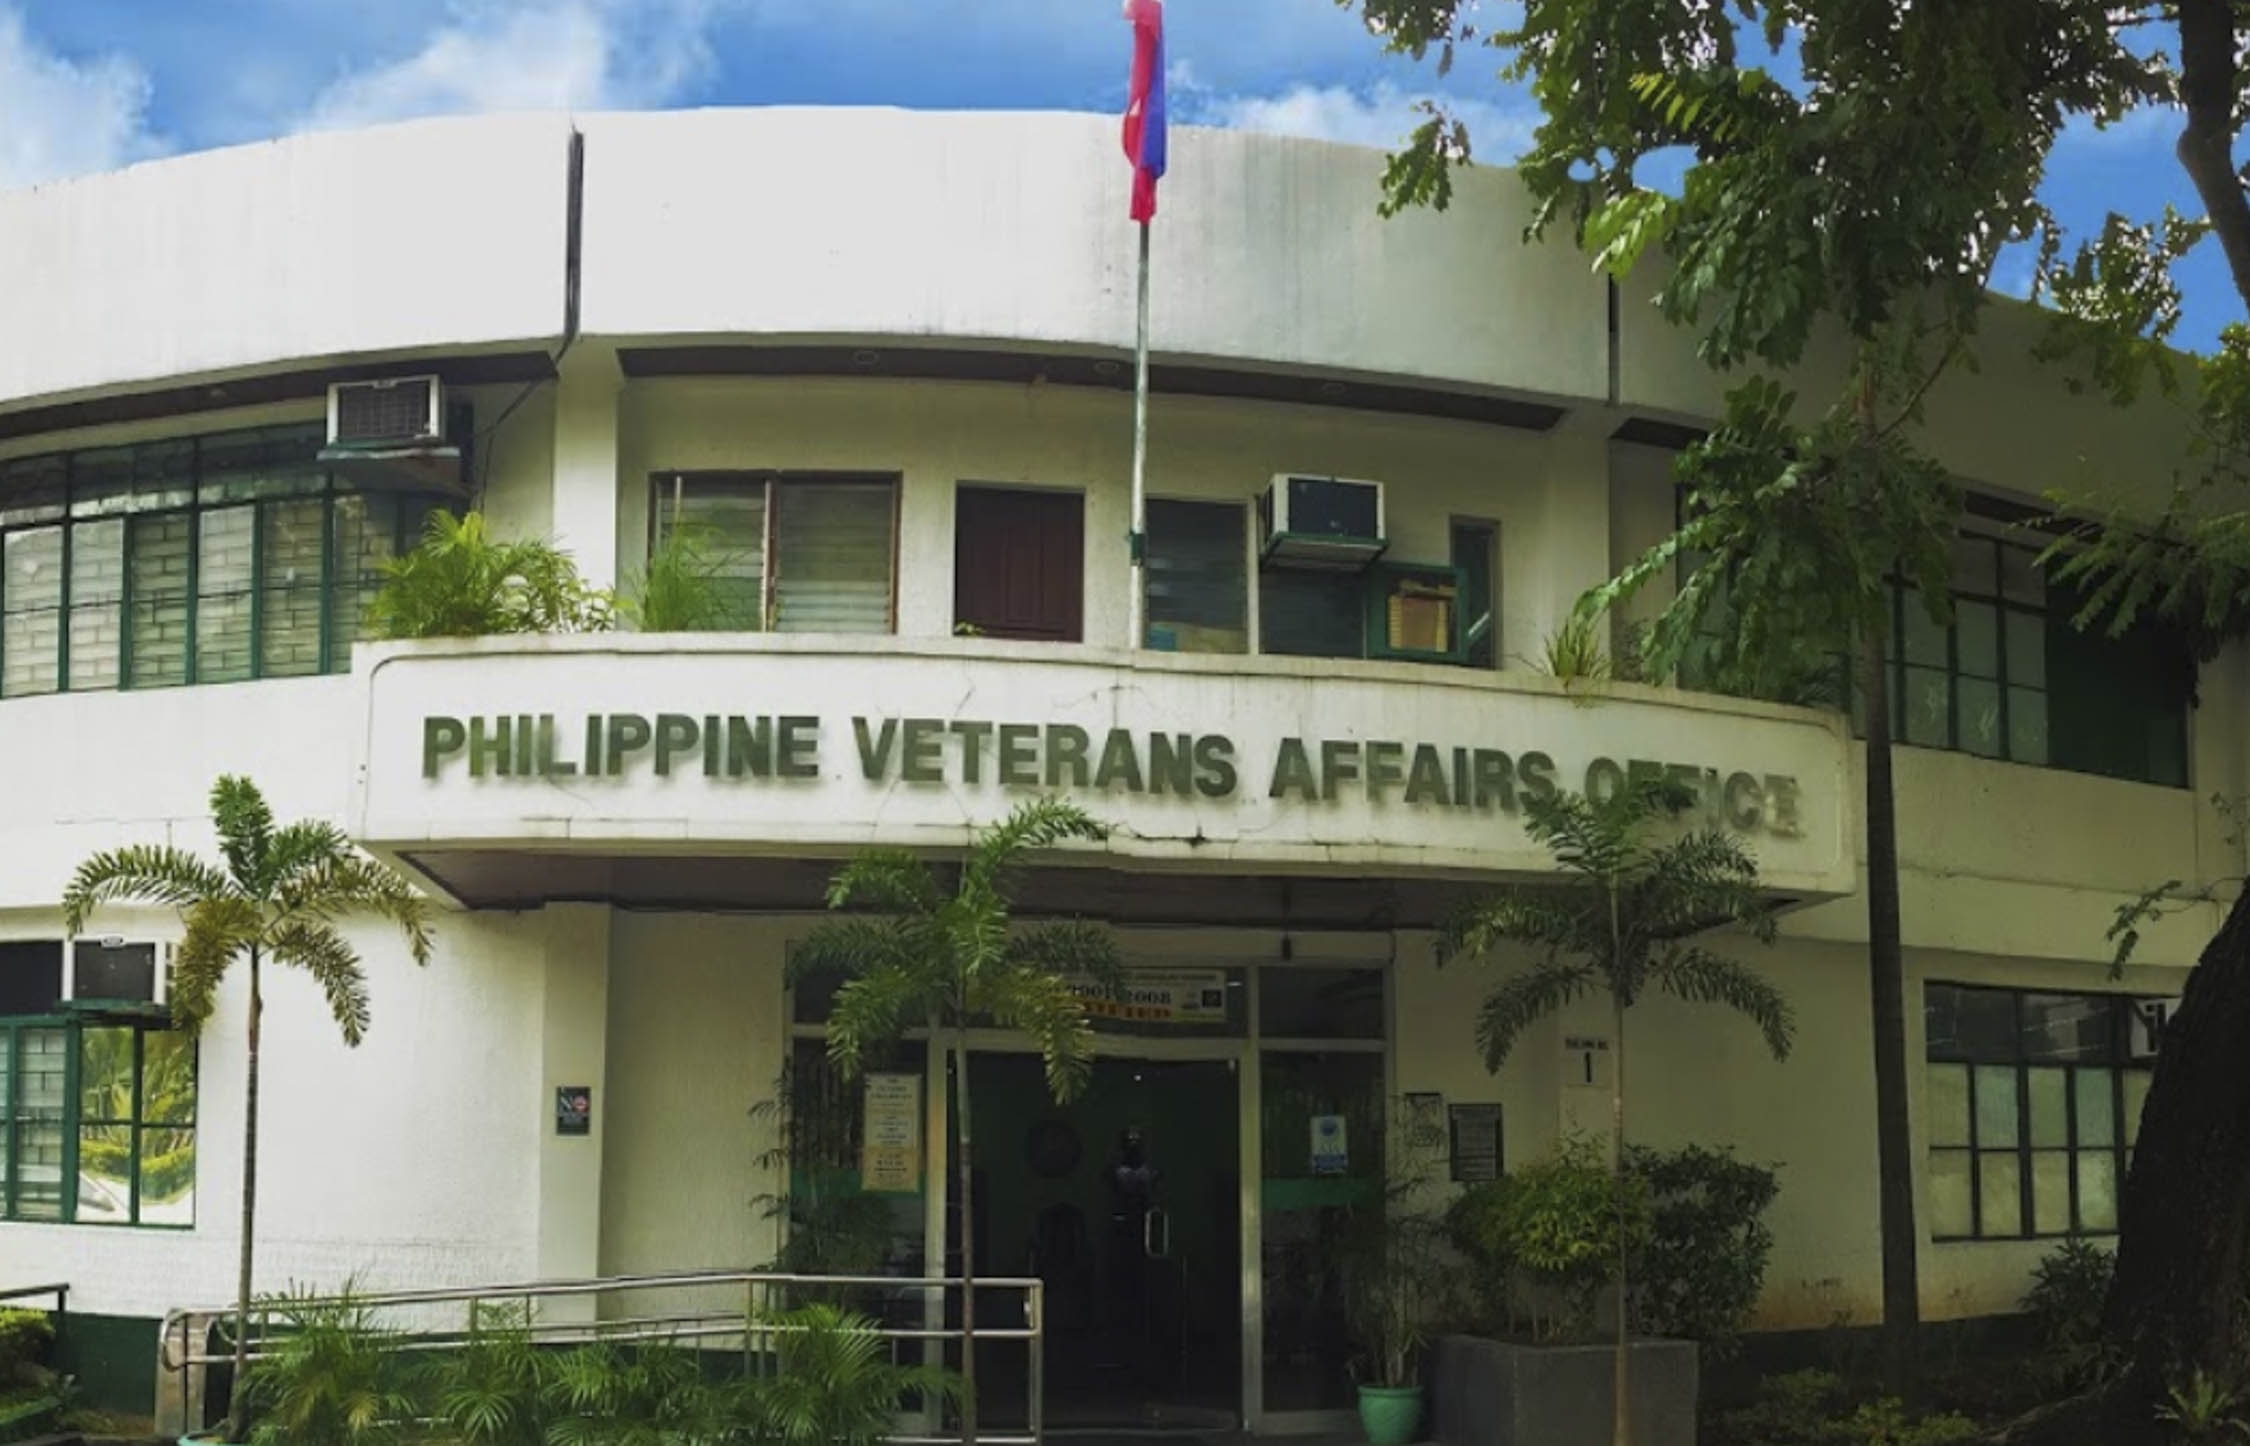 960 filipino world war ii veterans still alive, receiving benefits – pvao